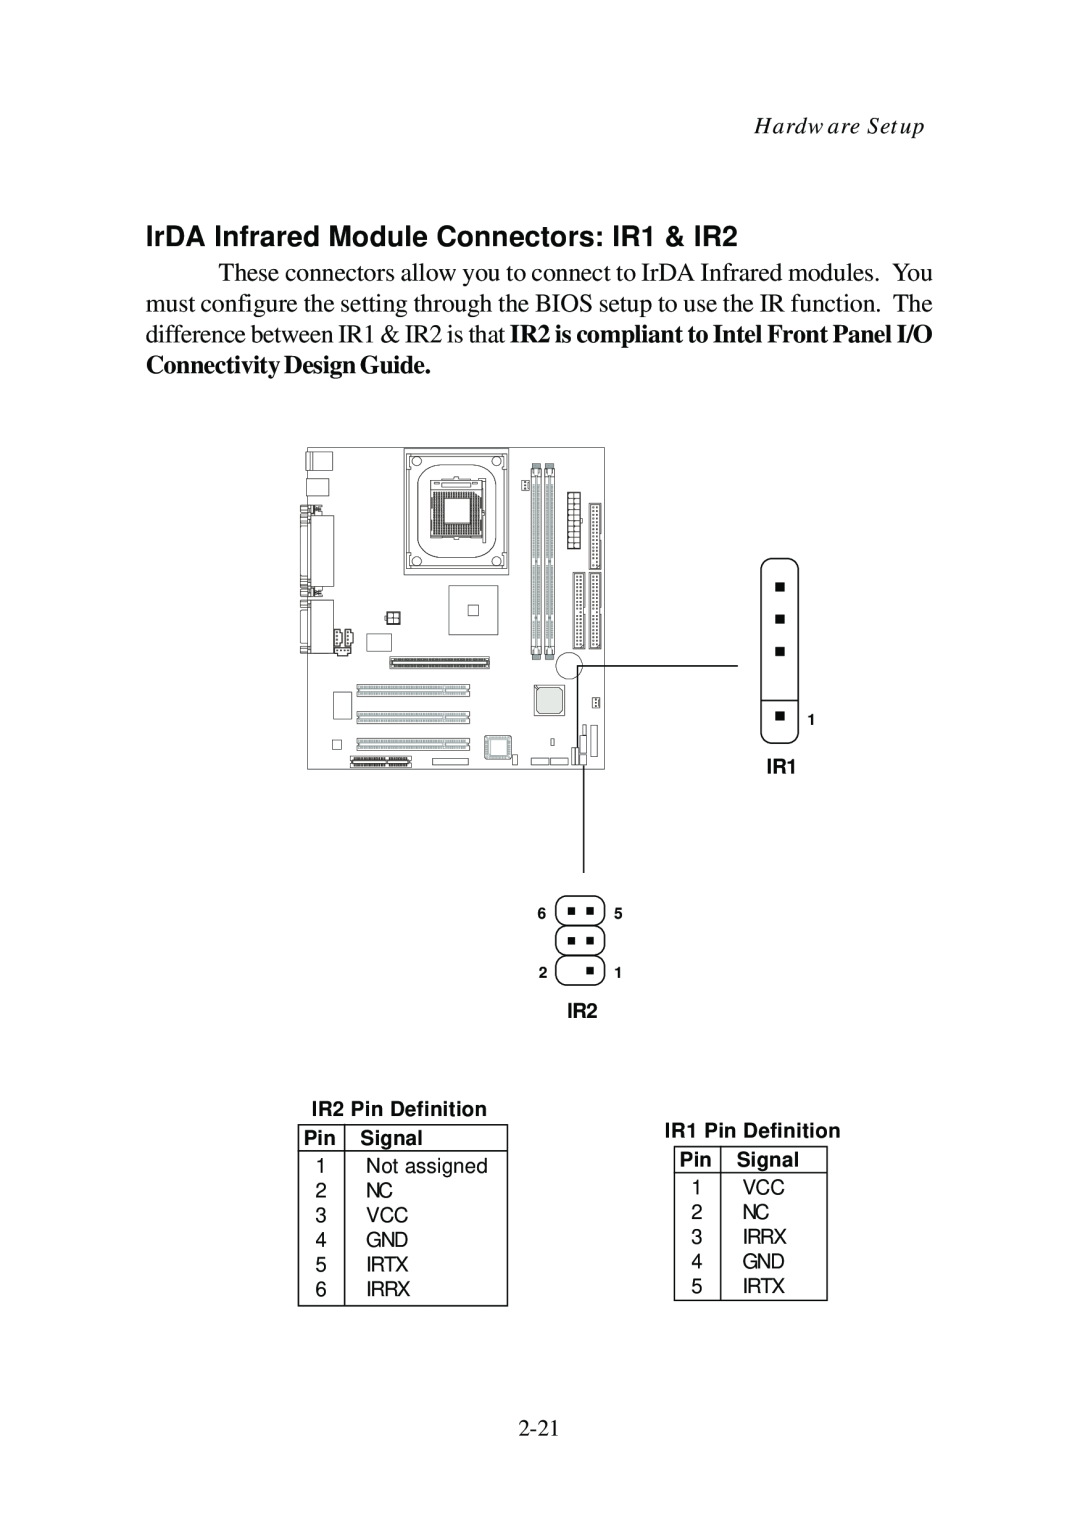 Premio Computer Aries/Centella manual IrDA Infrared Module Connectors IR1 & IR2, Connectivity Design Guide, Hardware Setup 